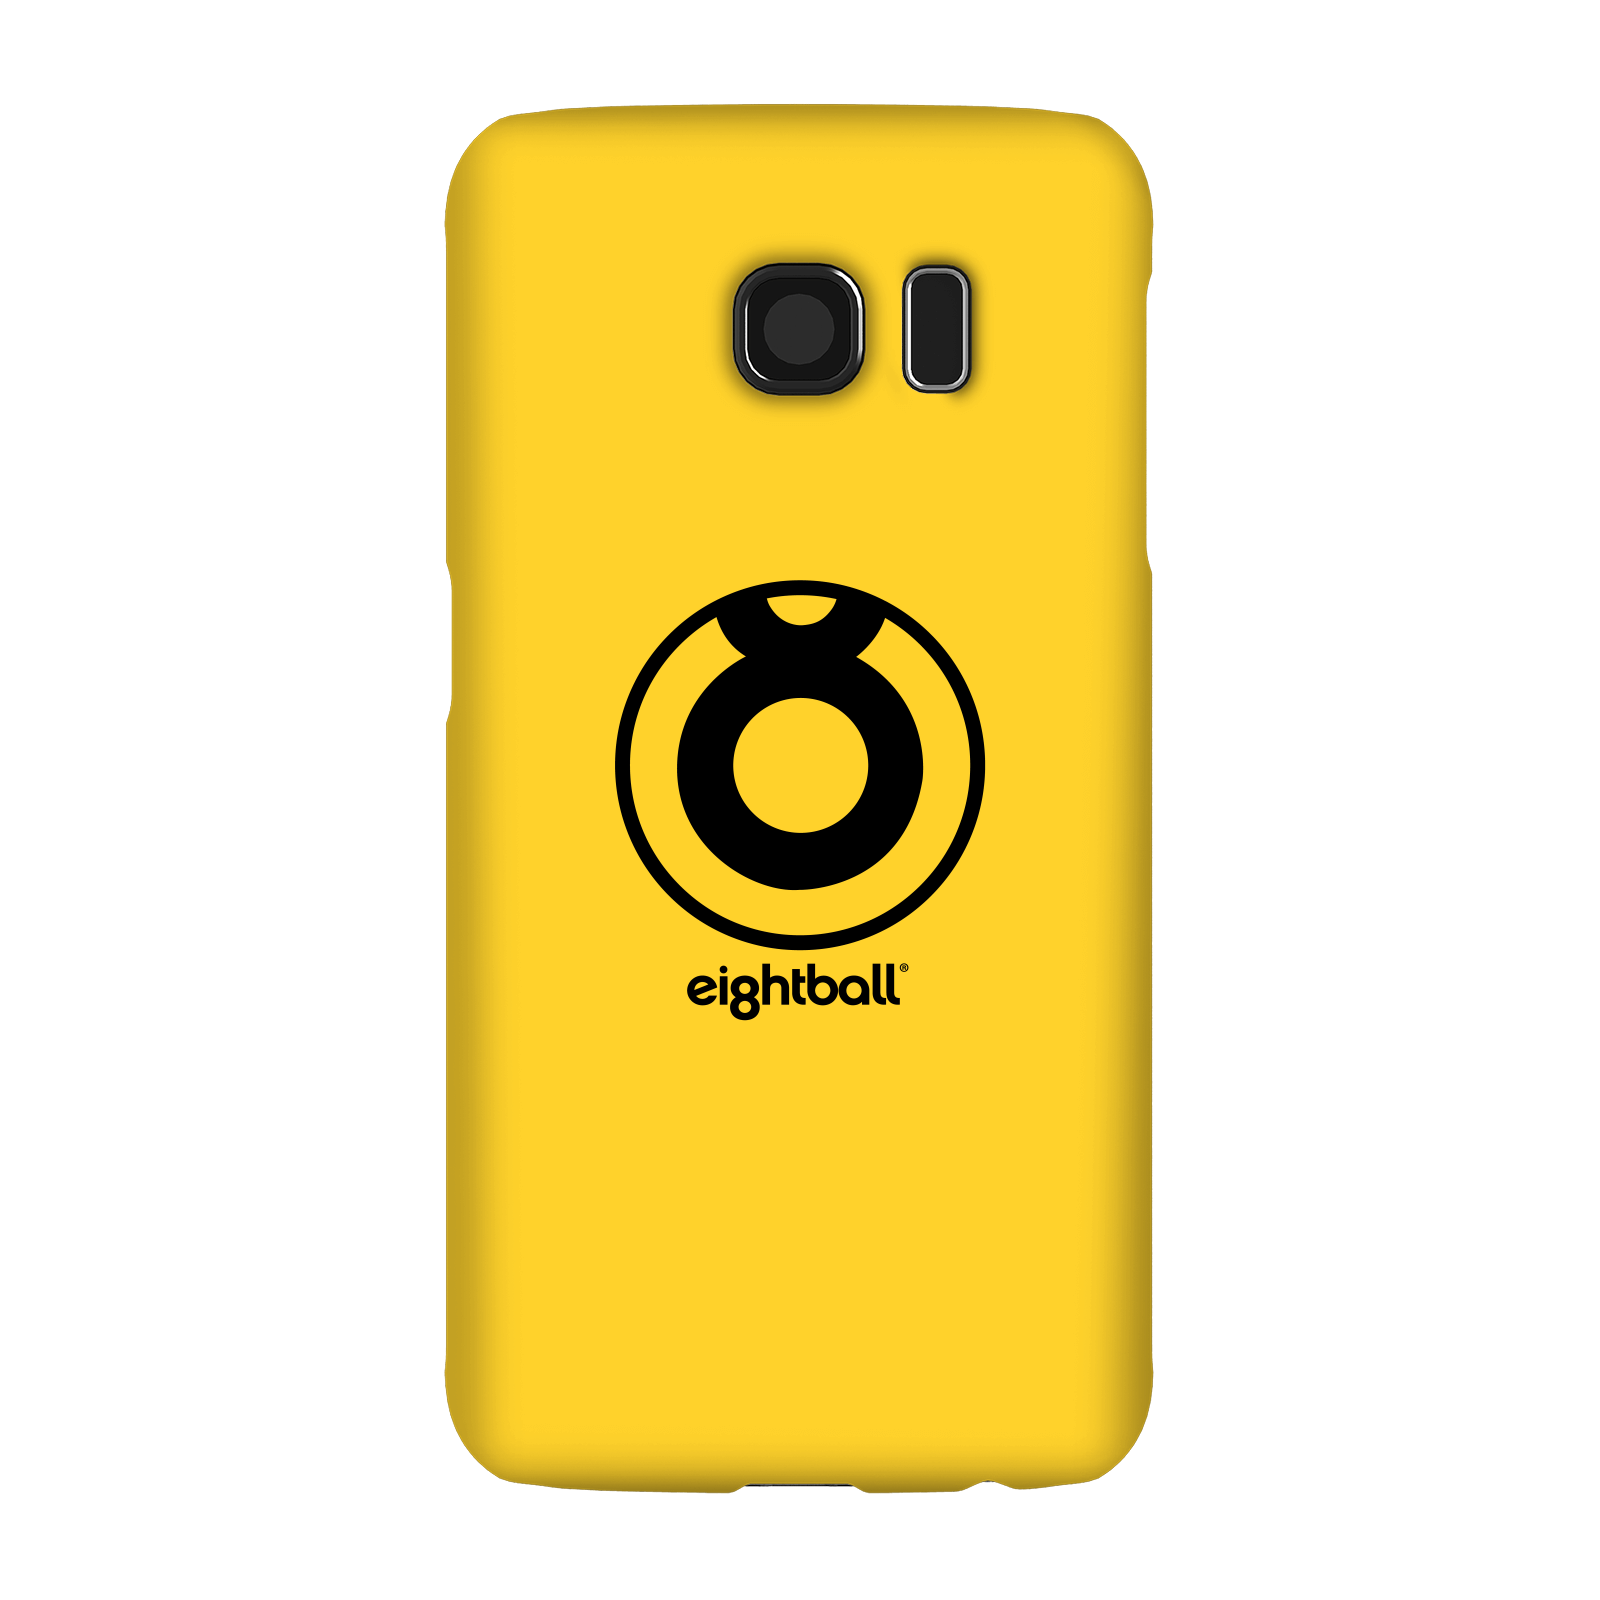 Funda Móvil Ei8htball Large Circle Logo para iPhone y Android - Samsung S6 - Carcasa rígida - Mate